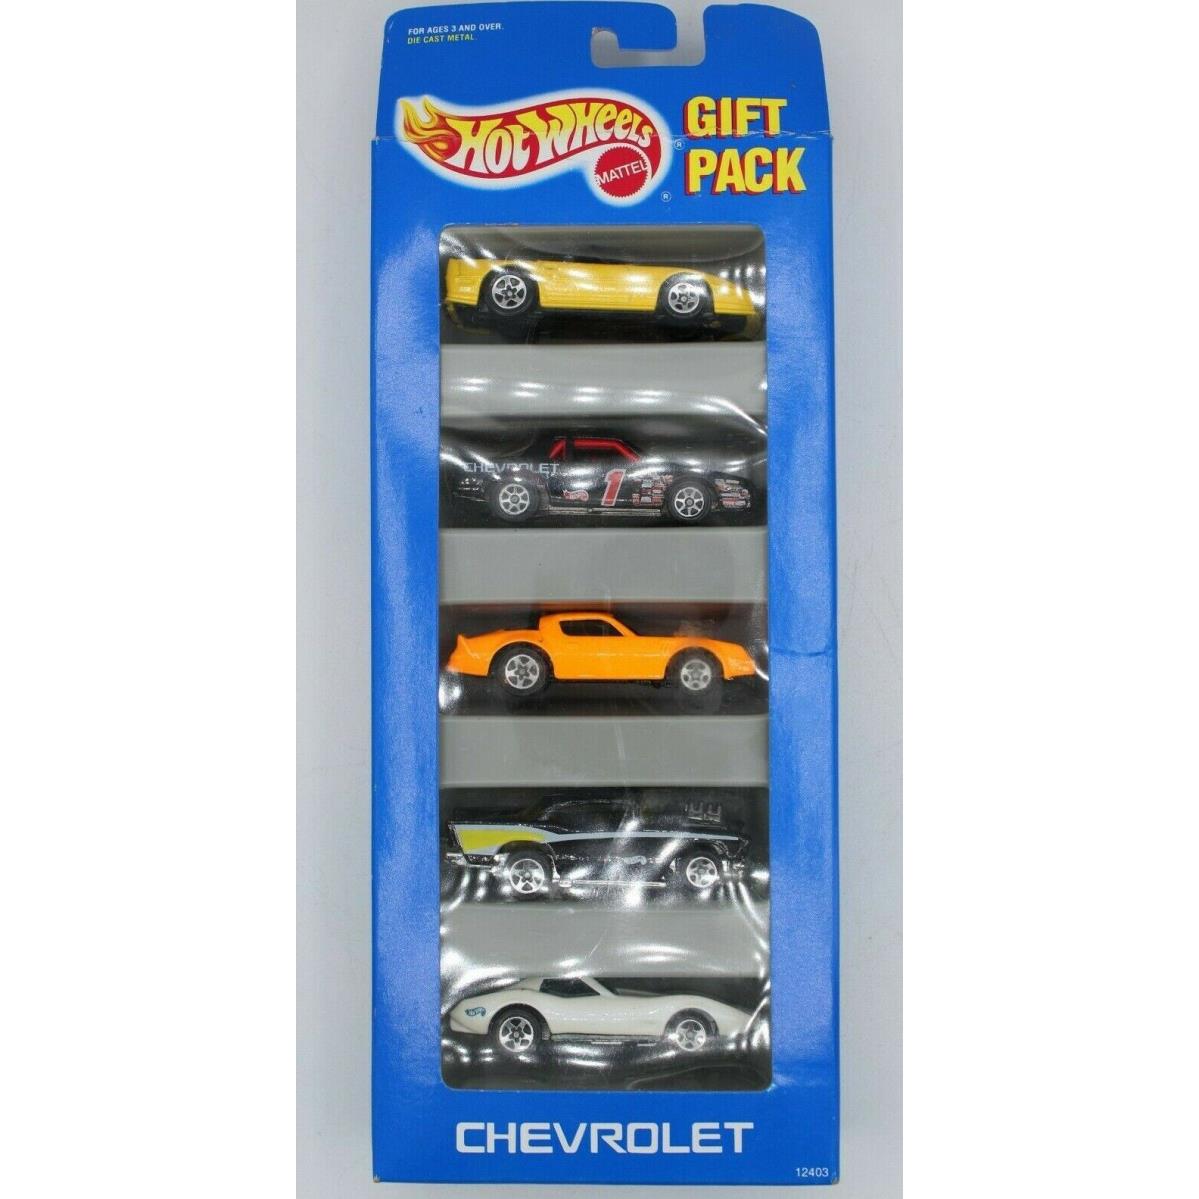 Hot Wheels 1993 Gift Pack 5 Cars Chevrolet 12403